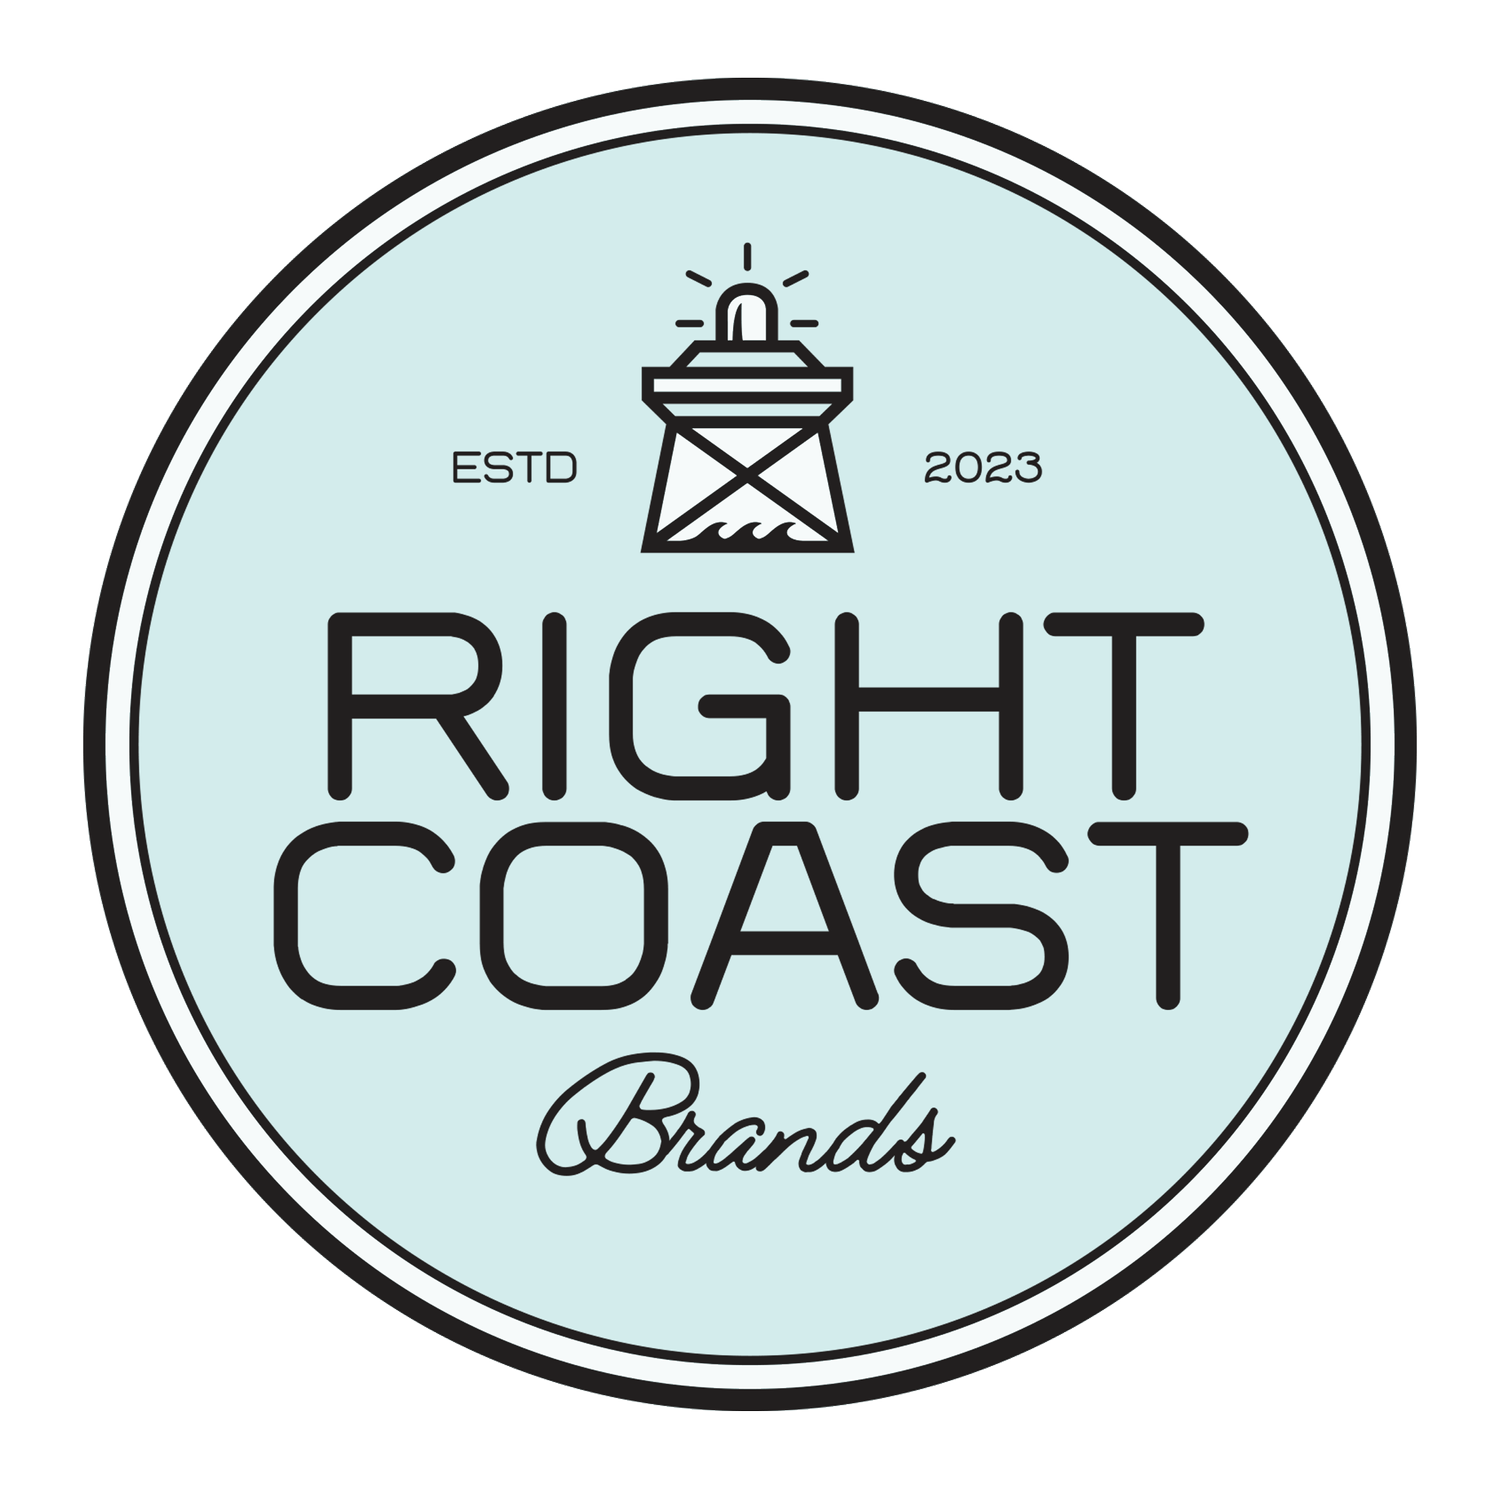 Right Coast Brands